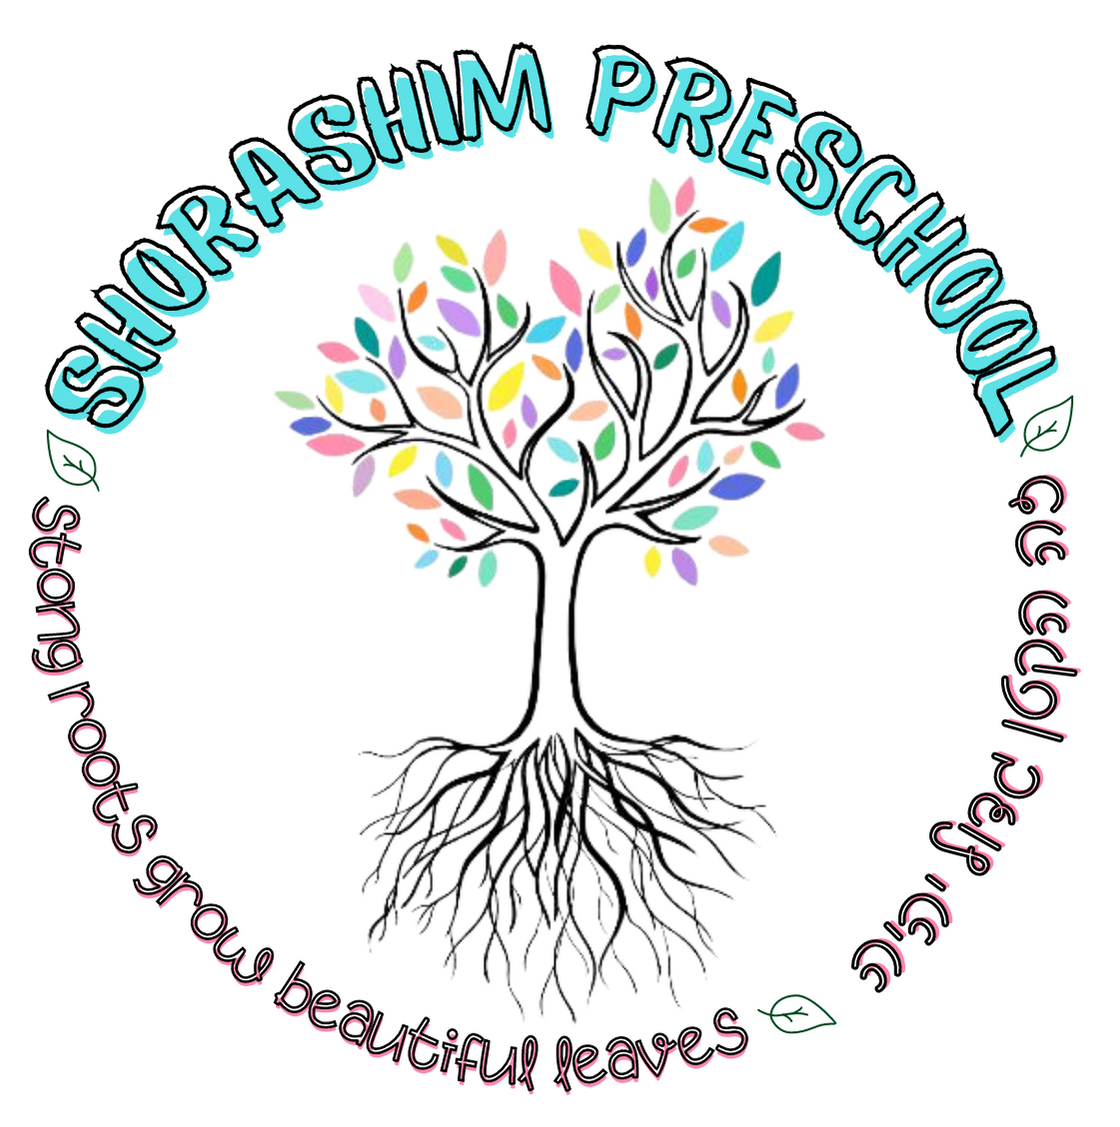 Shorashim Preschool